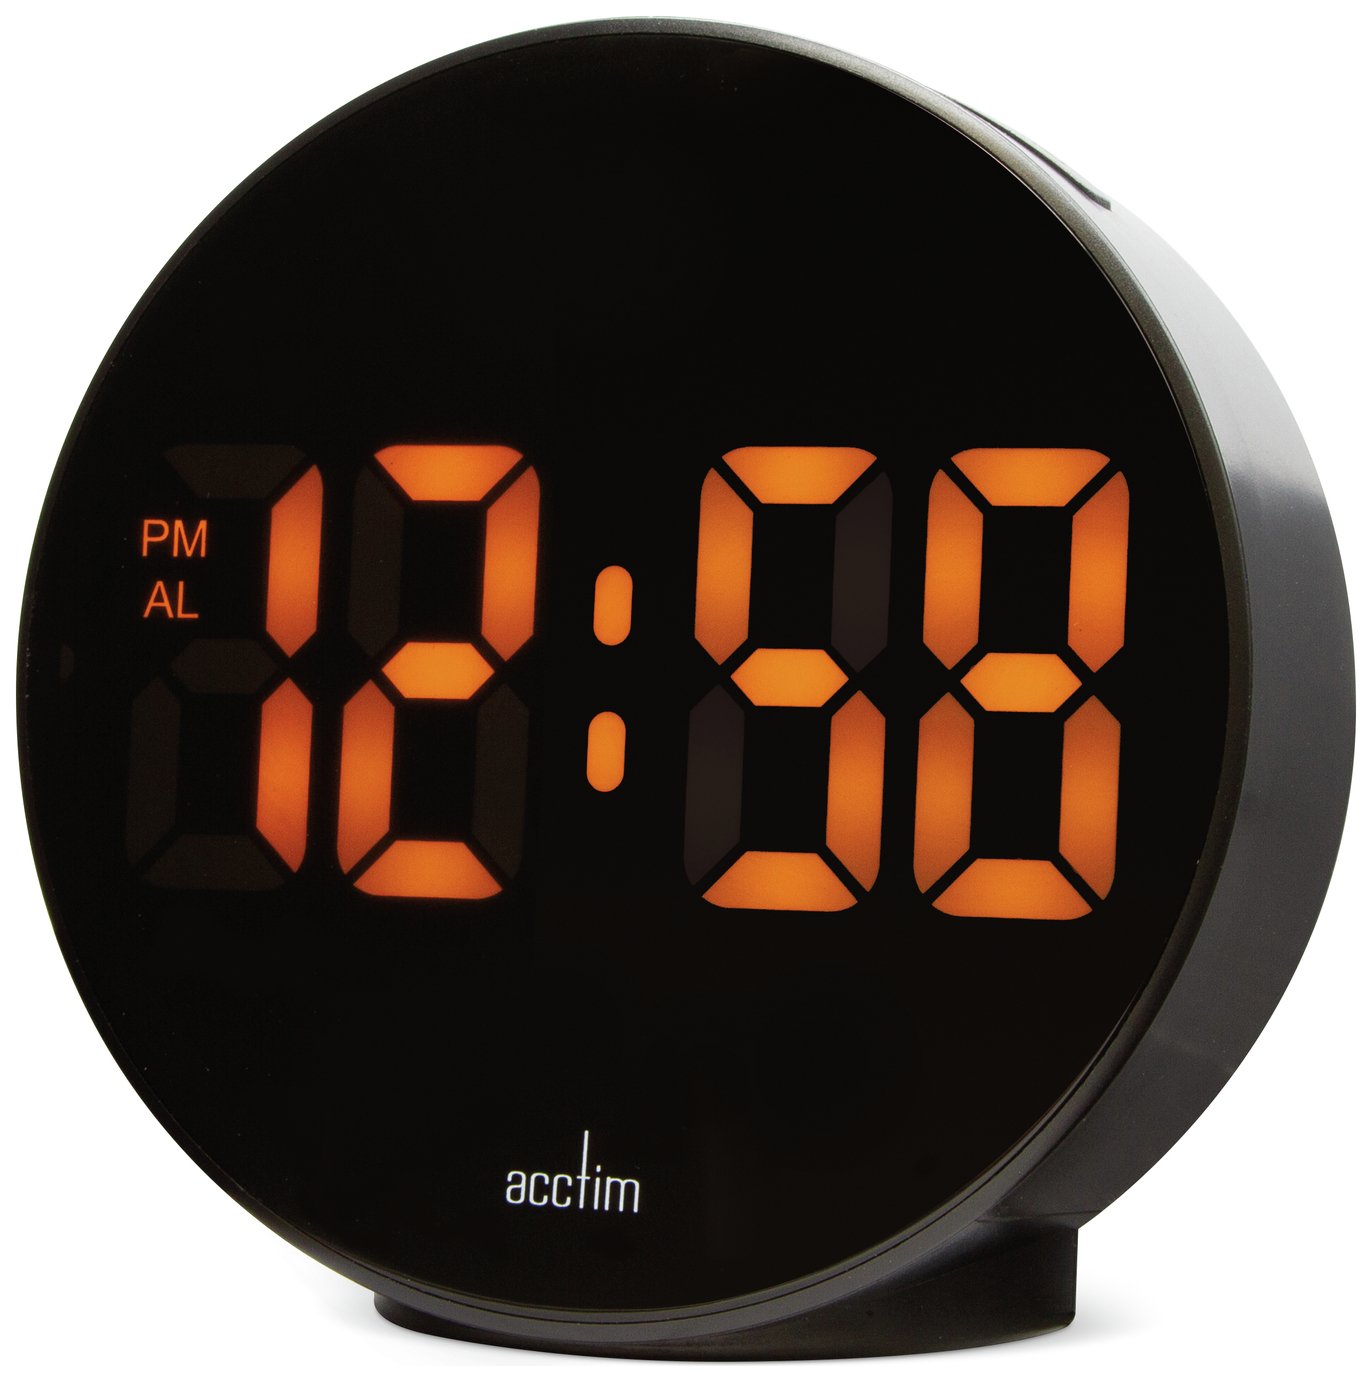 Acctim Circulo Digital LED Alarm Clock - Black & Orange